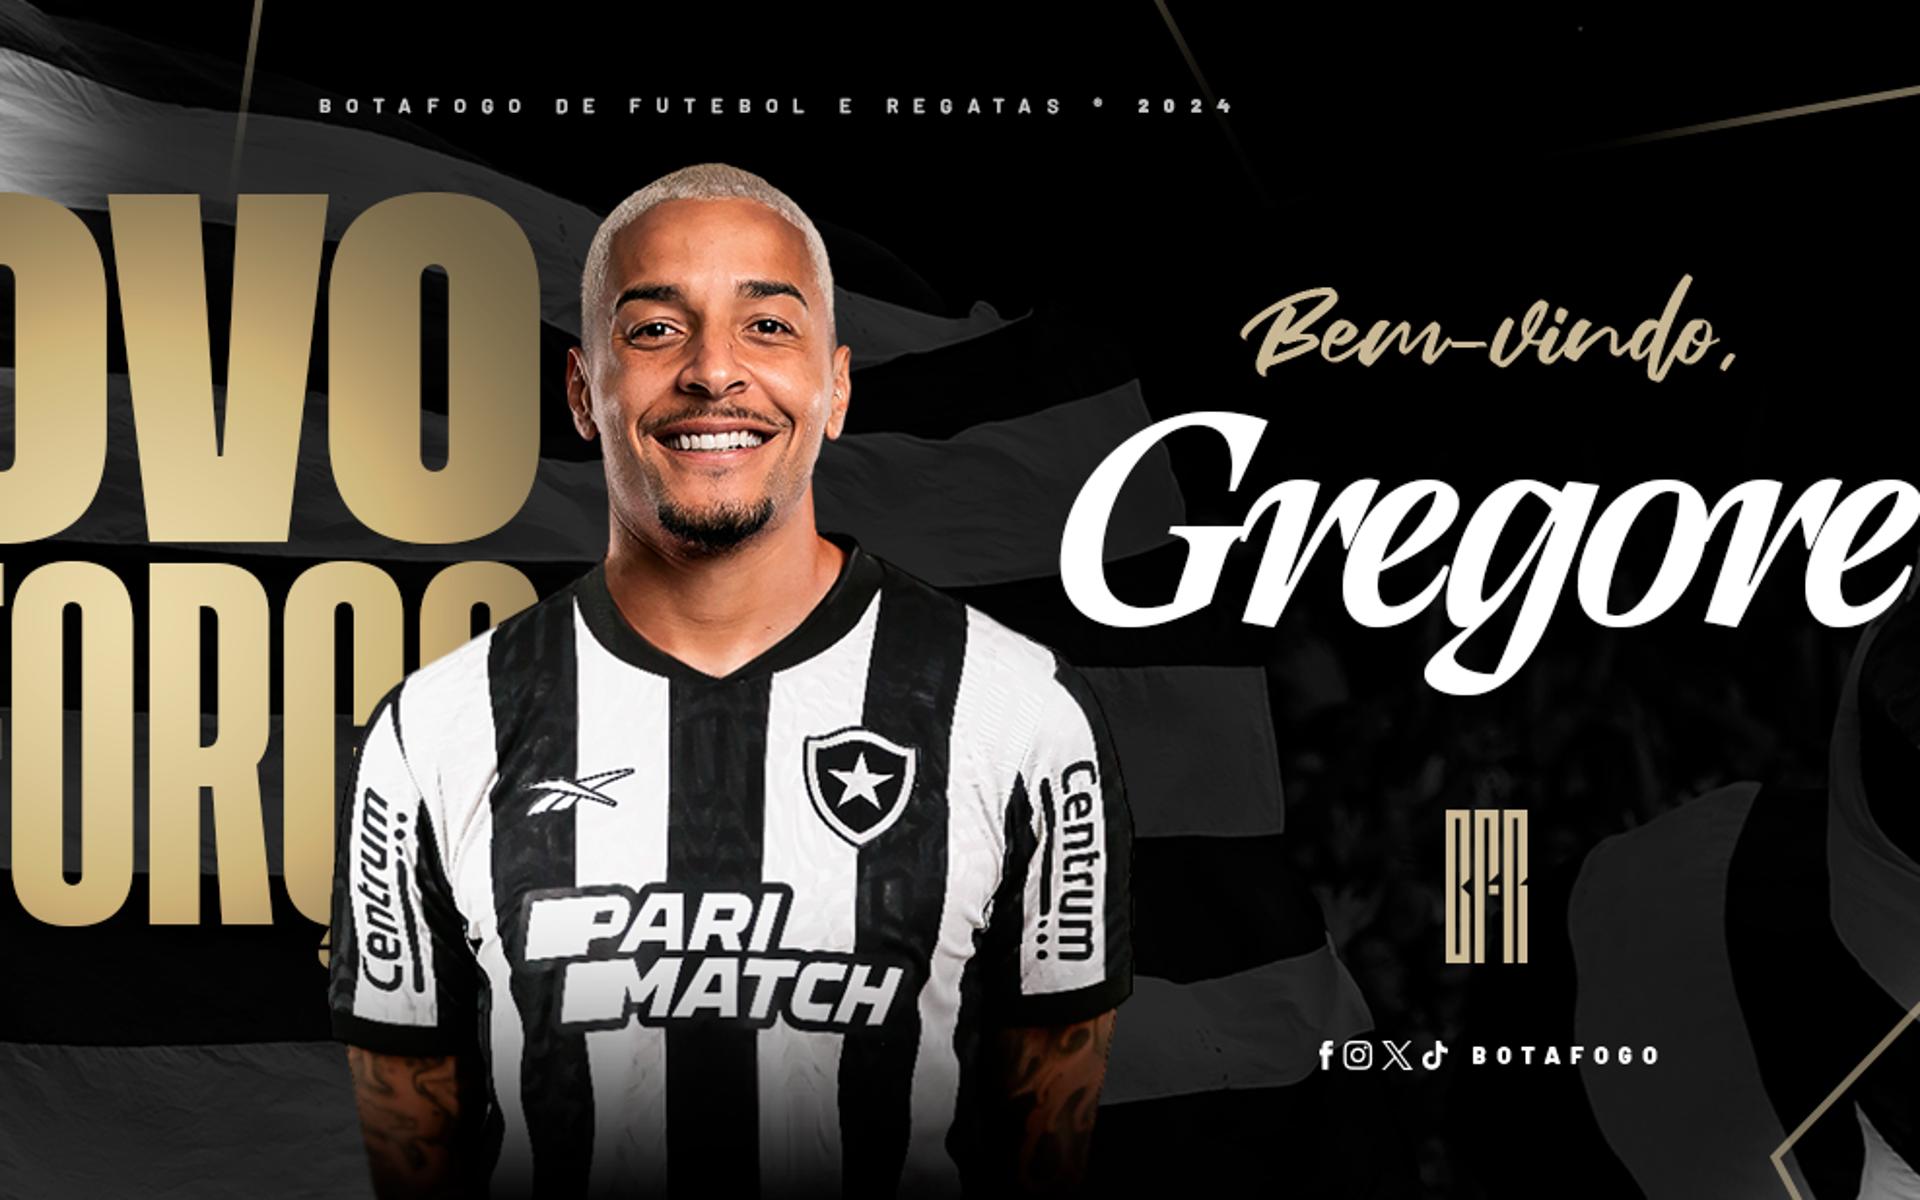 Gregore-Botafogo-aspect-ratio-512-320